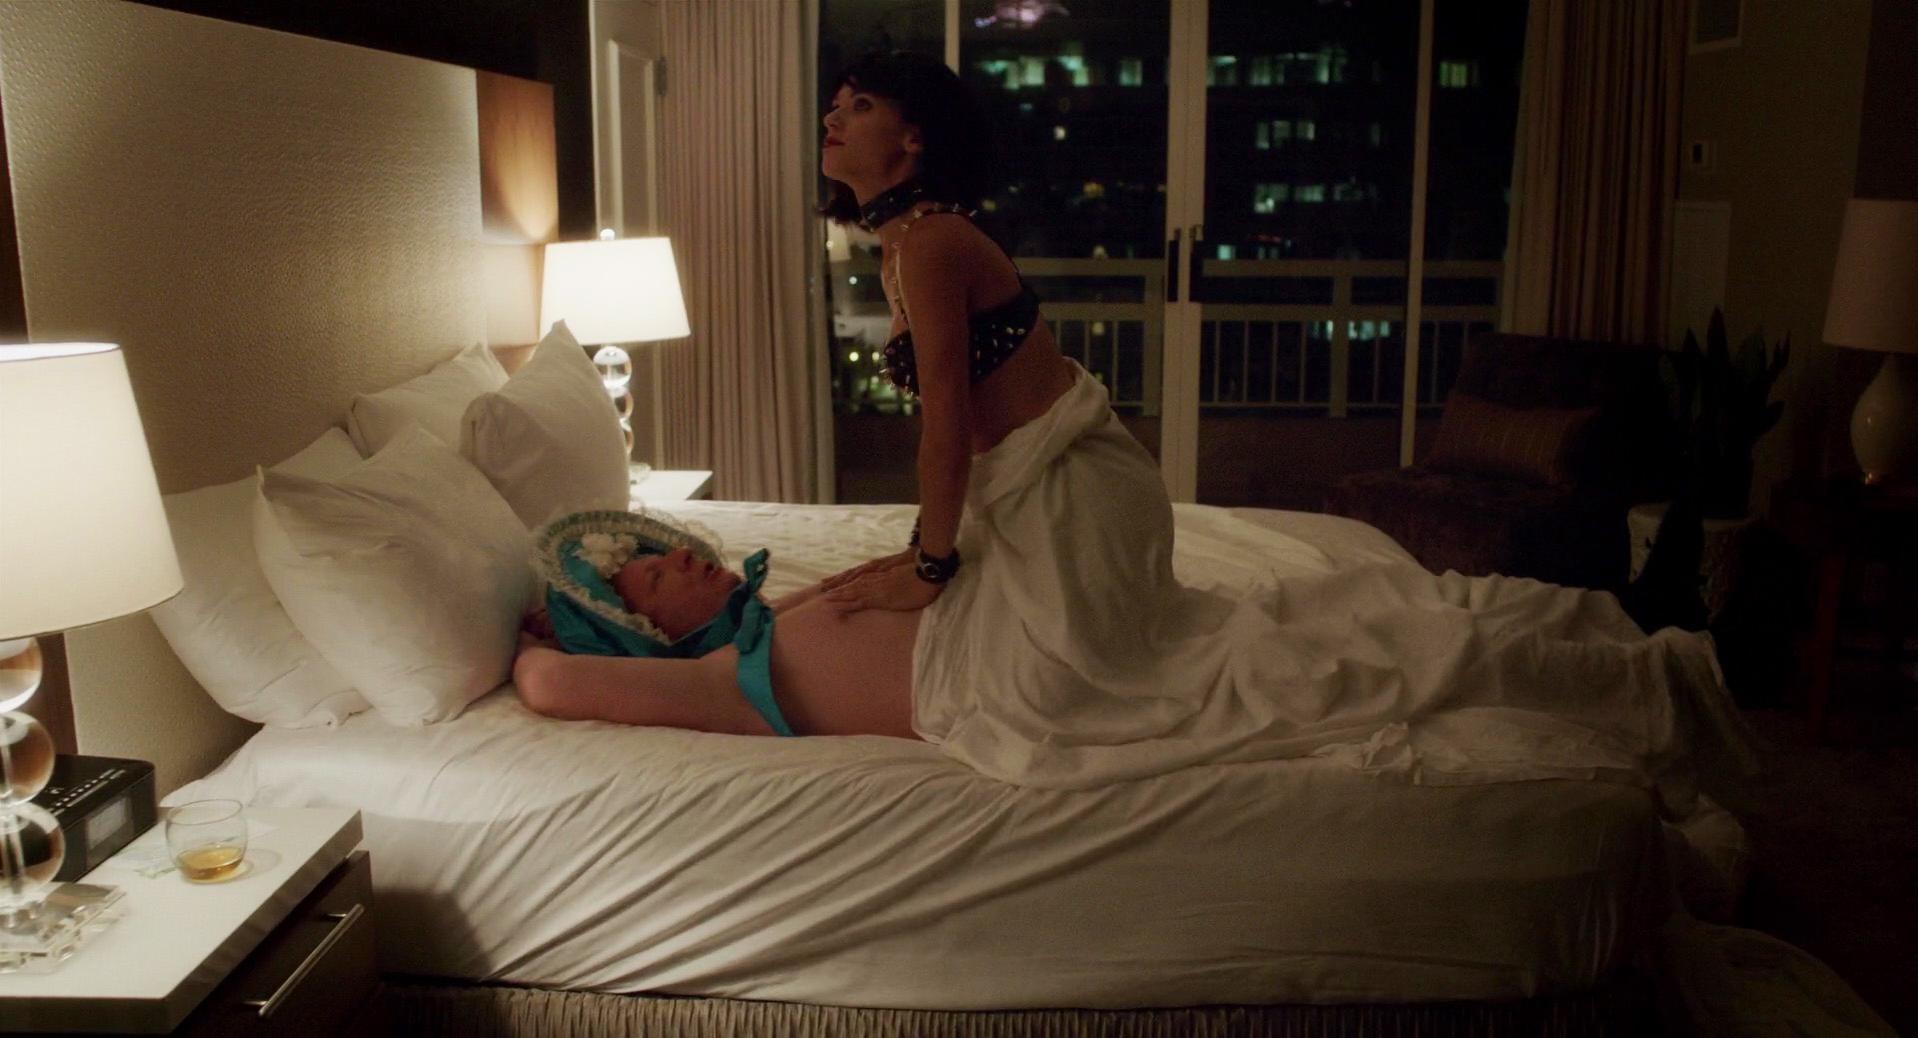 Nude Video Celebs Lyndsy Fonseca Sexy The Escort 2015